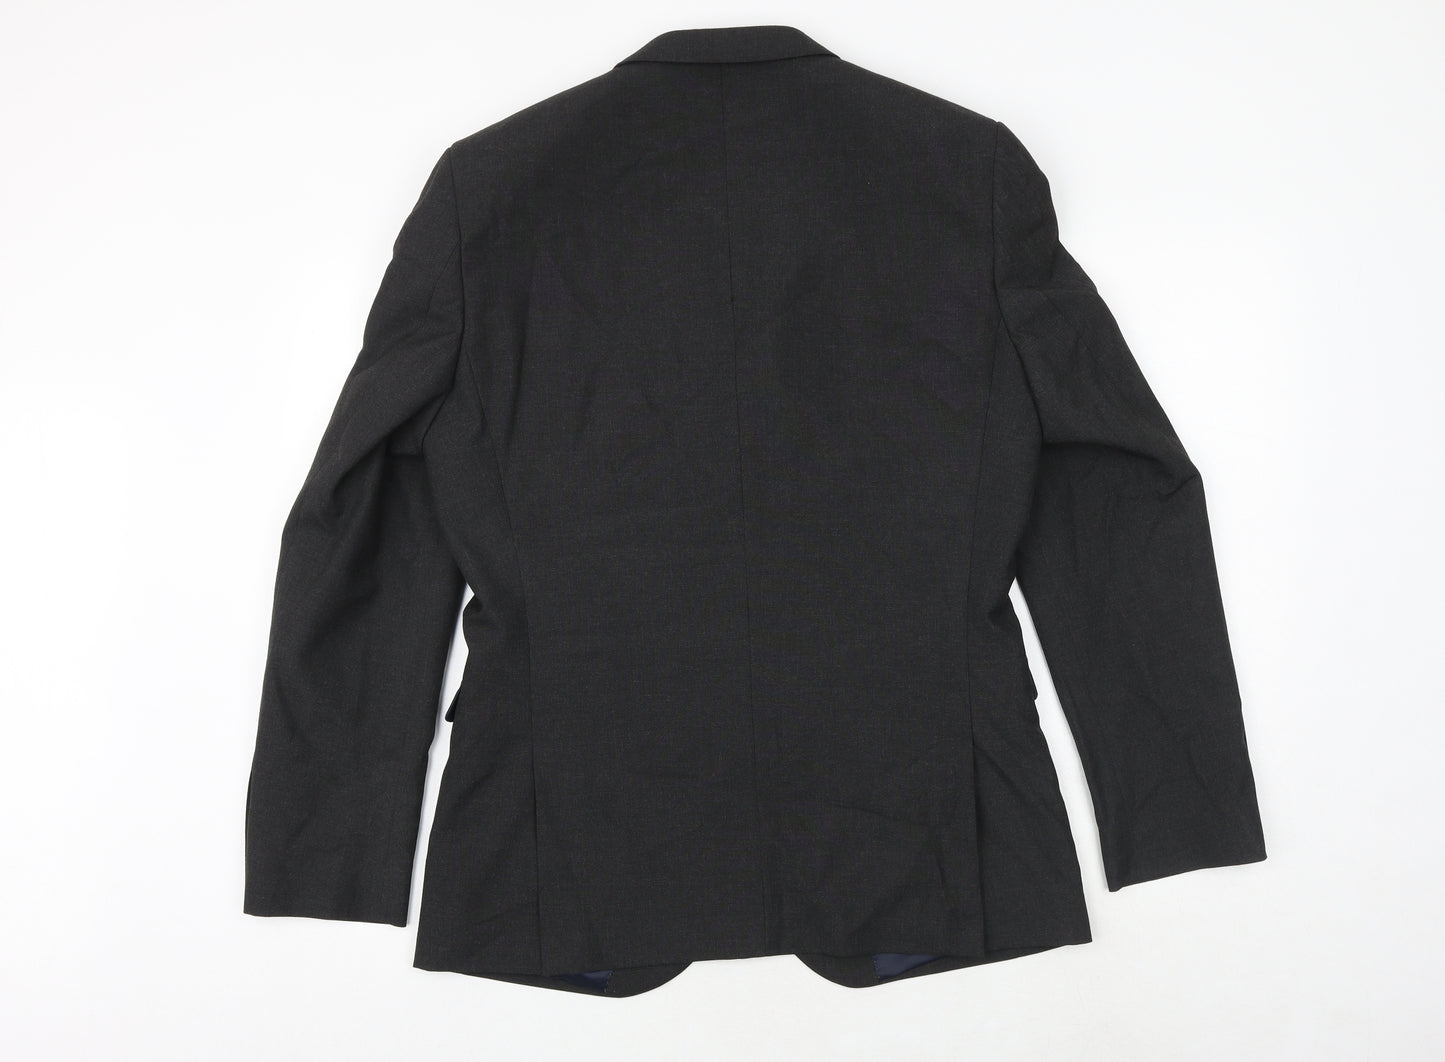 NEXT Mens Grey Polyester Jacket Suit Jacket Size 40 Regular